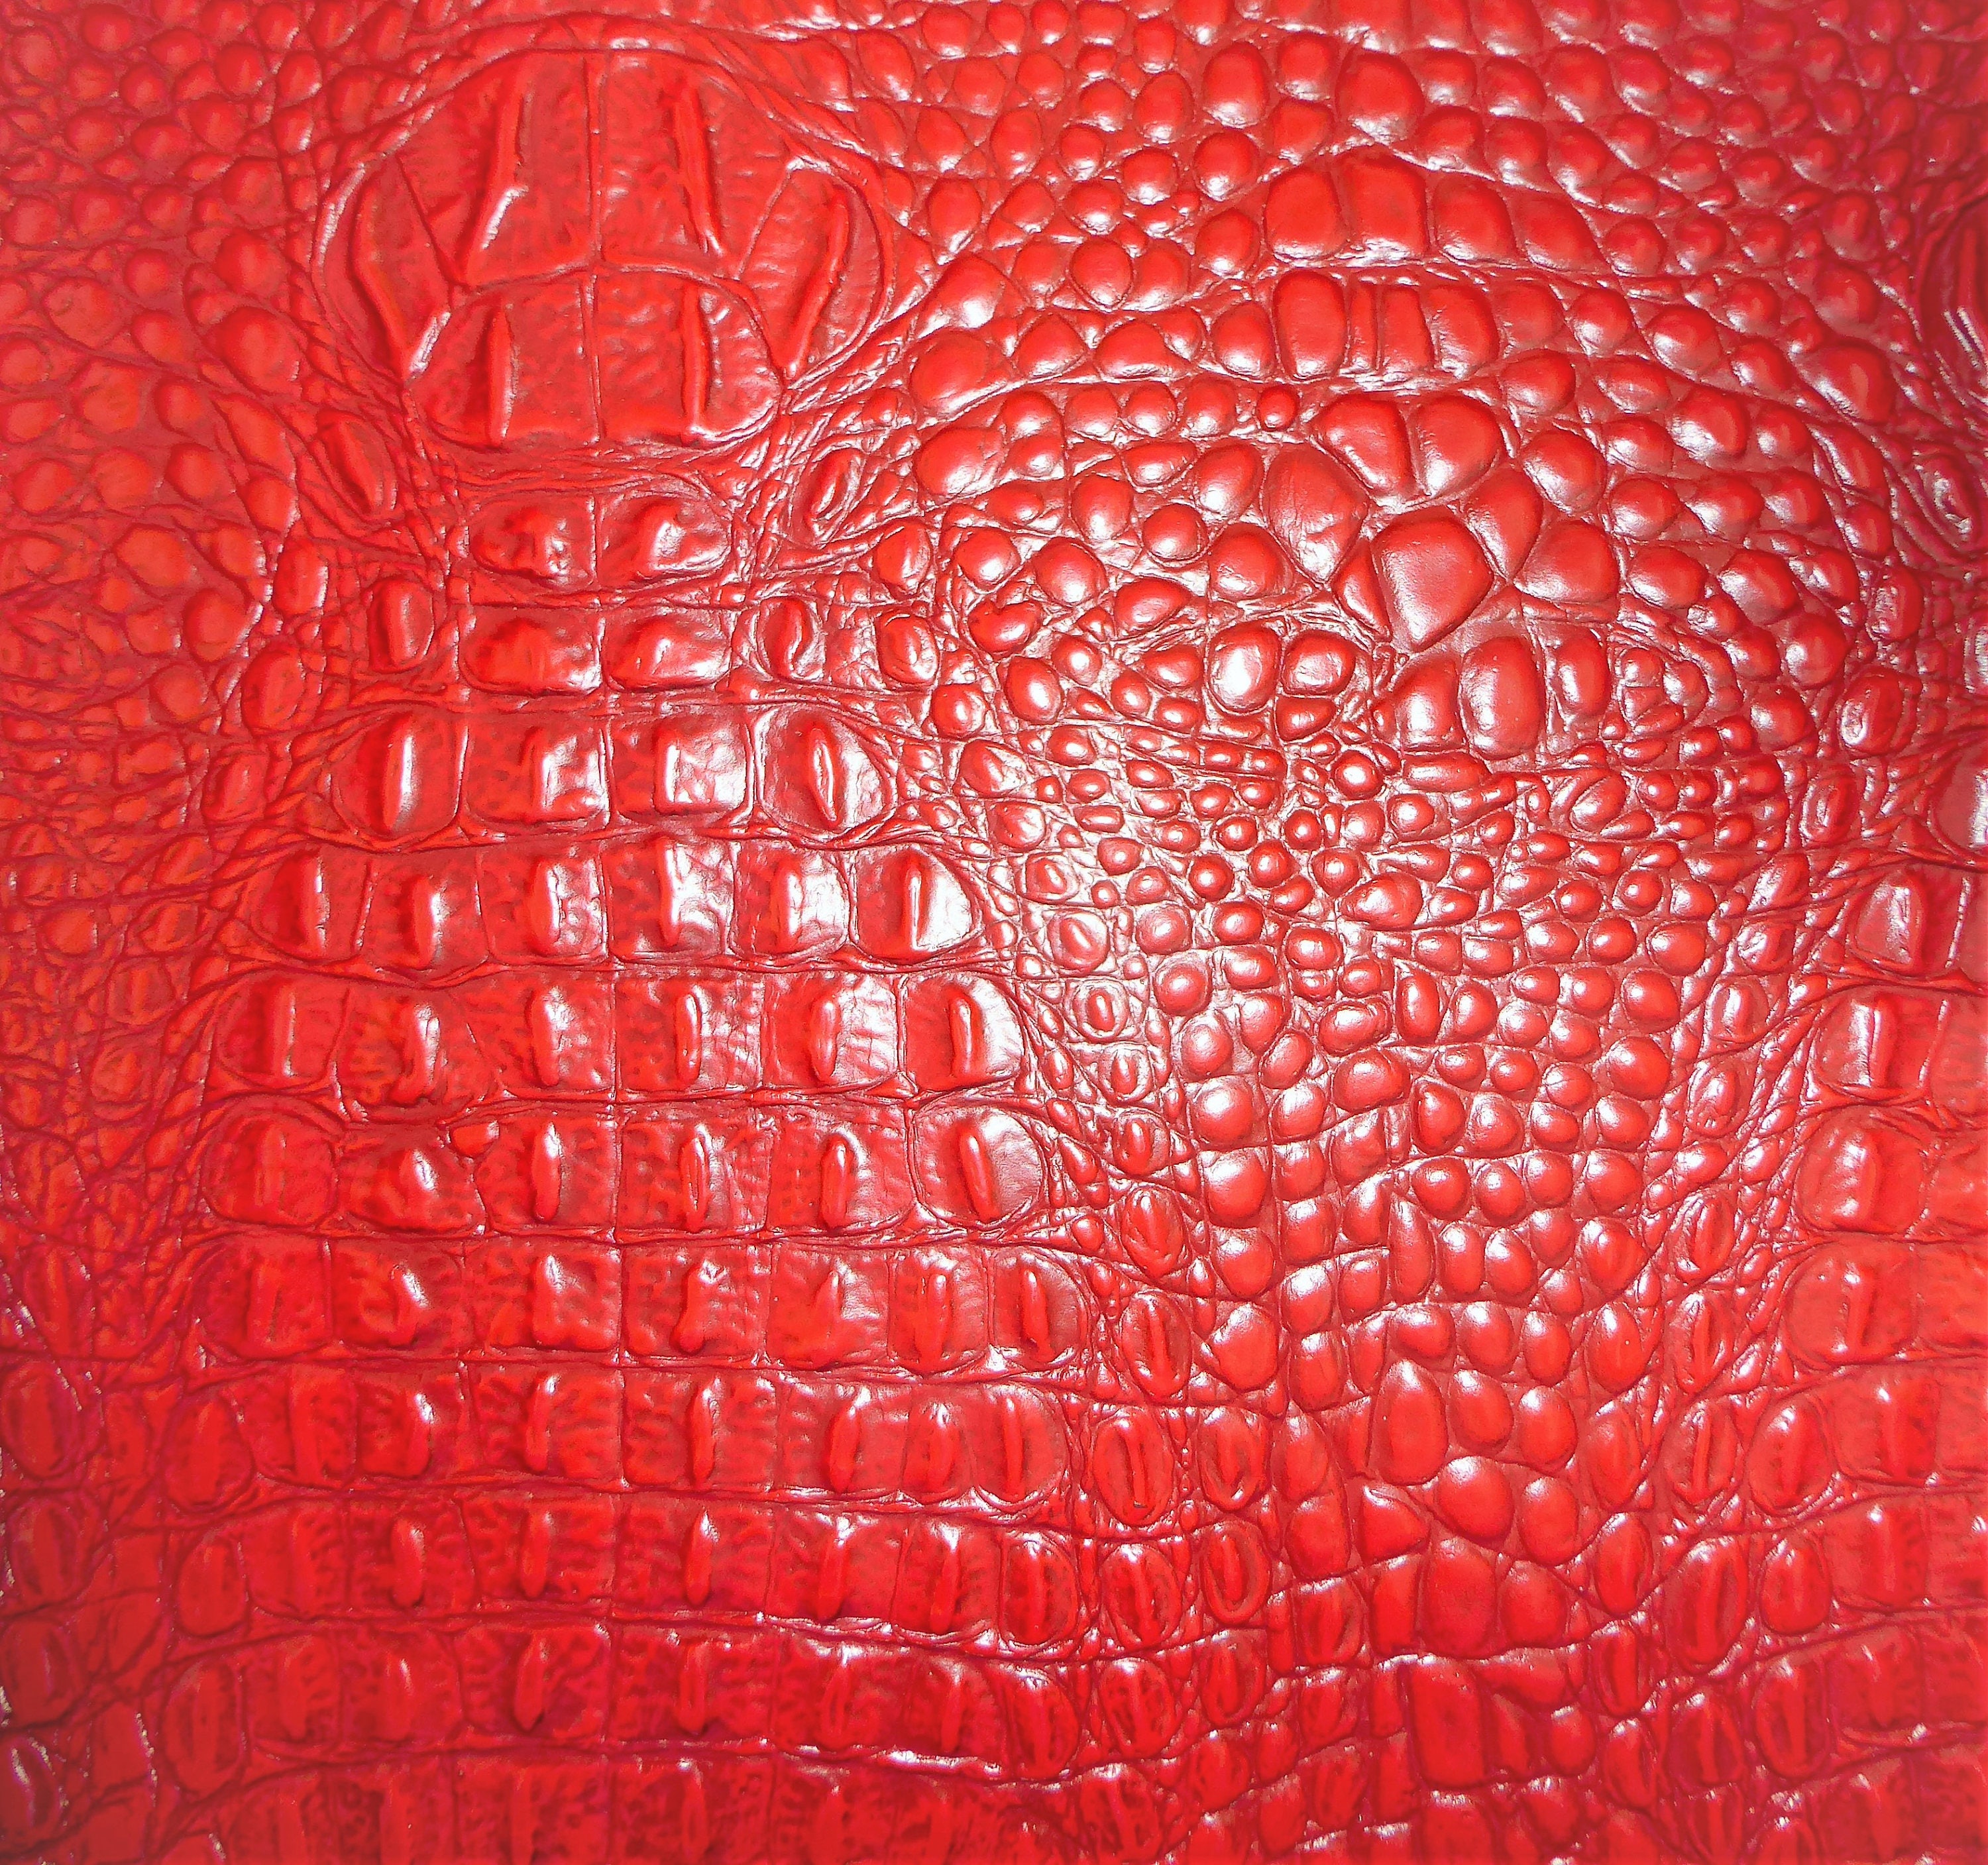 Sticker Red crocodile leather